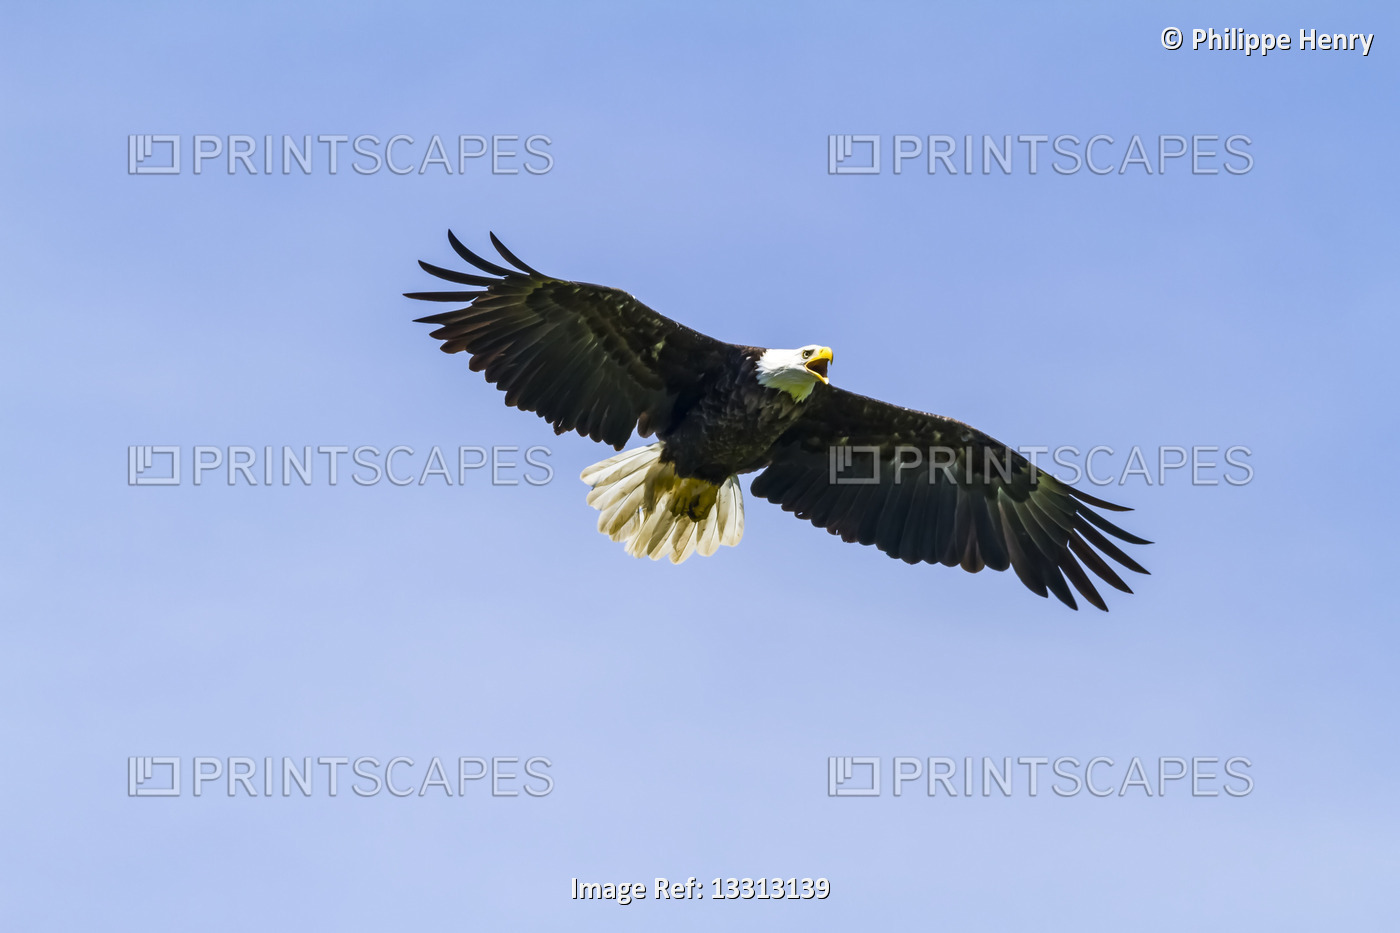 Bald eagle (Haliaeetus leucocephalus) in flight in a blue sky; Quebec, Canada